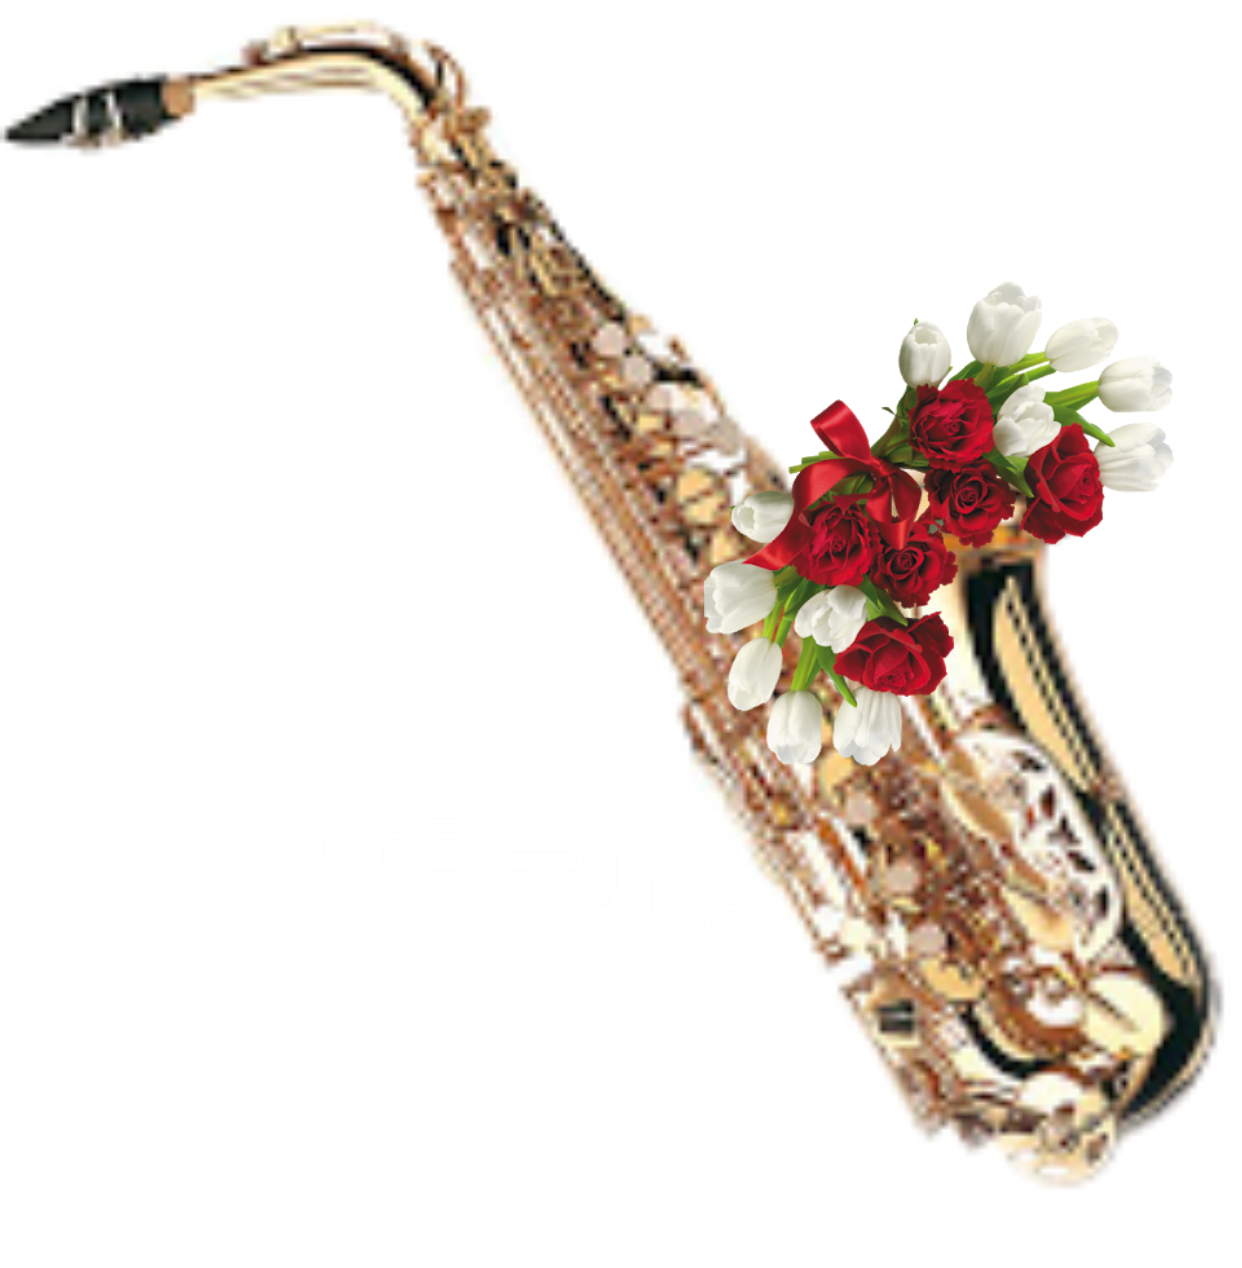 Приятный саксофон. Саксофон. Саксофон музыкальный инструмент. Цветы саксофонисту. Саксофон и цветы.